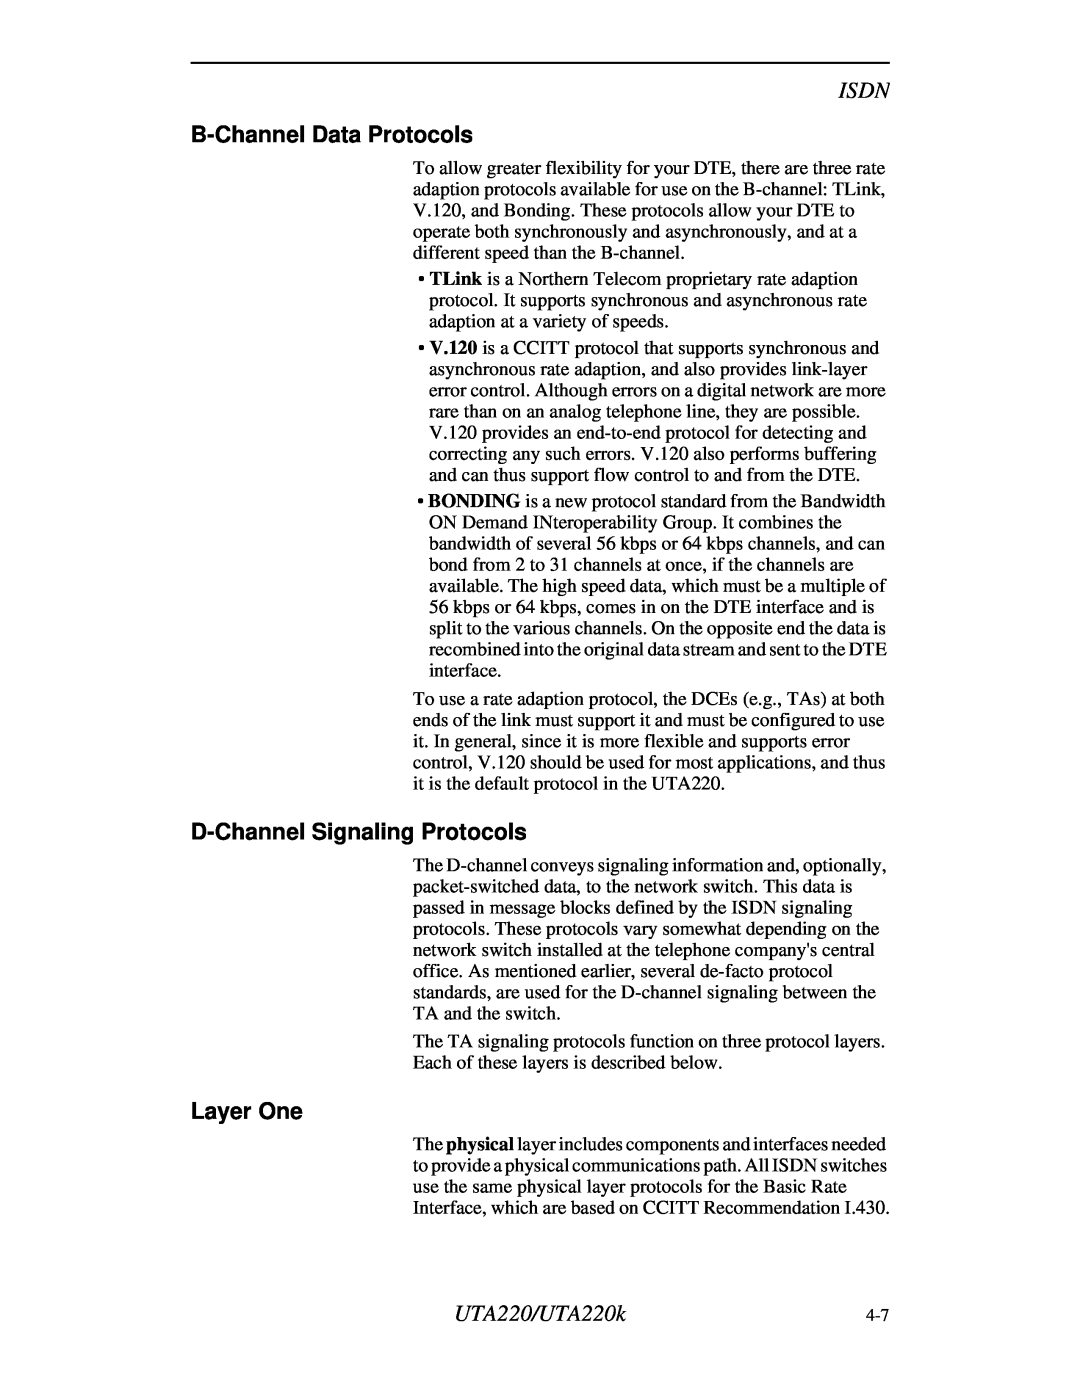 Northern UTA220/UTA220k manual B-Channel Data Protocols, D-Channel Signaling Protocols, Layer One, Isdn 